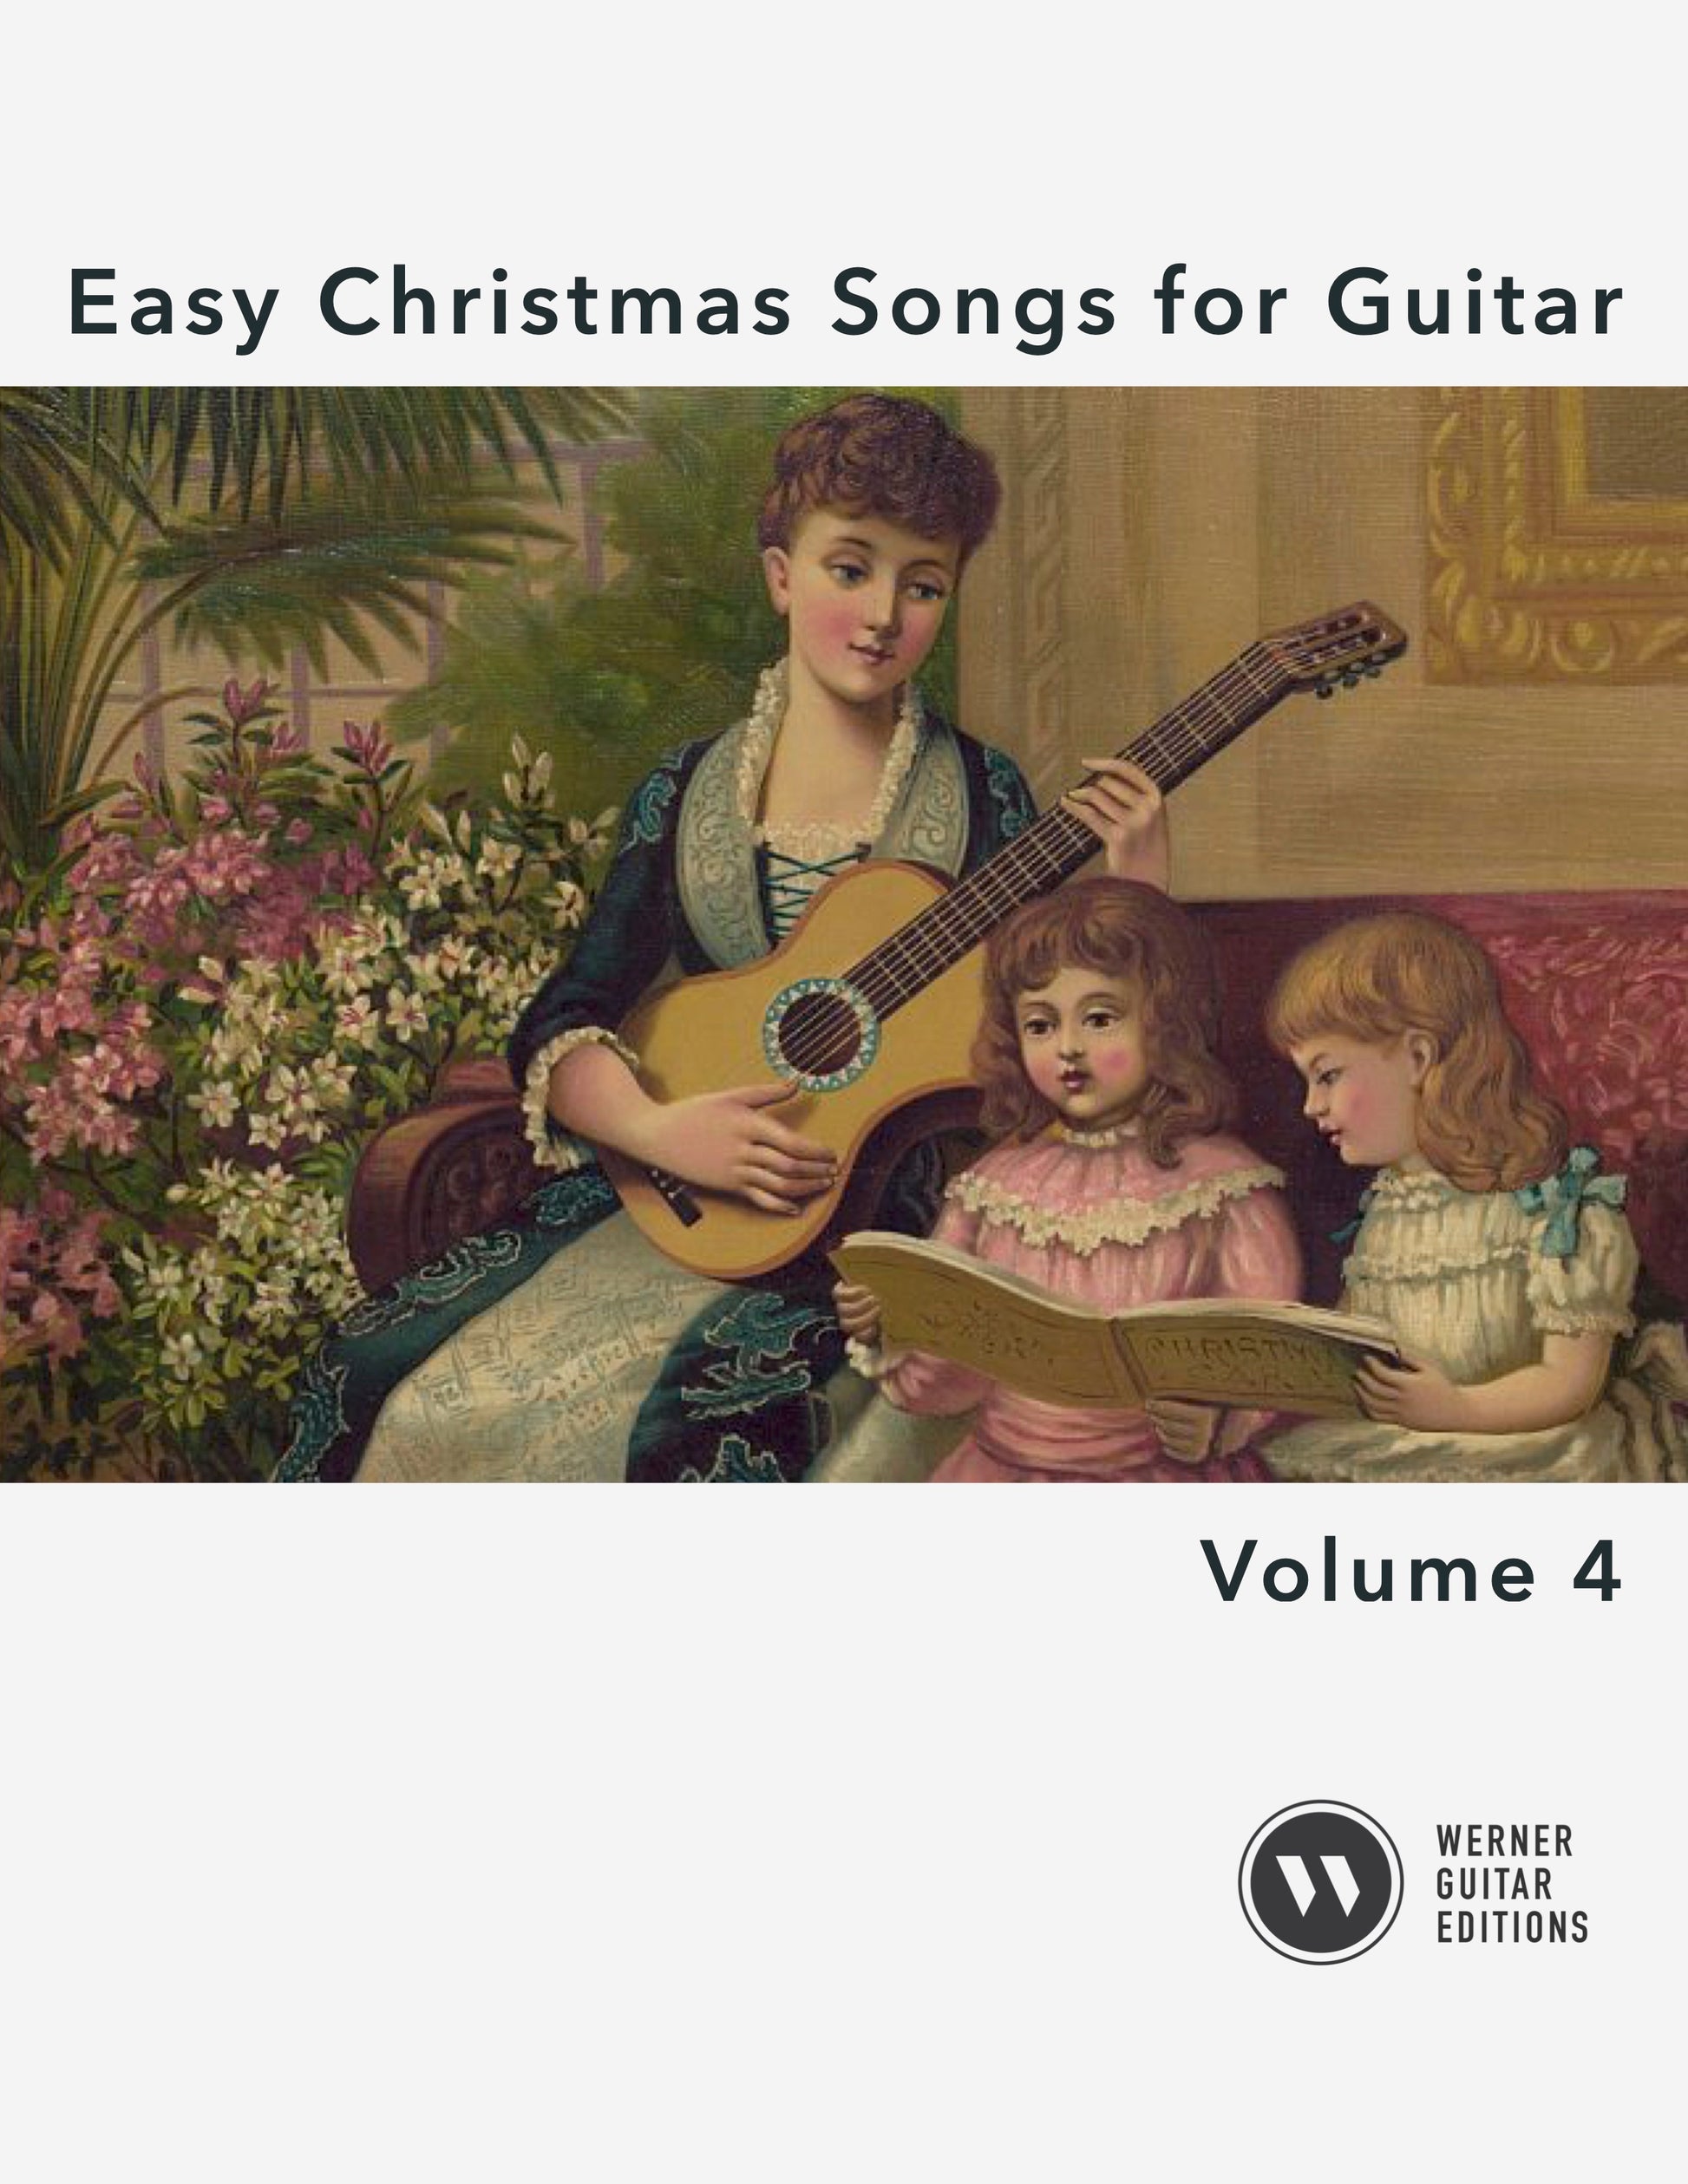 Easy Christmas Songs for Guitar Vol.4